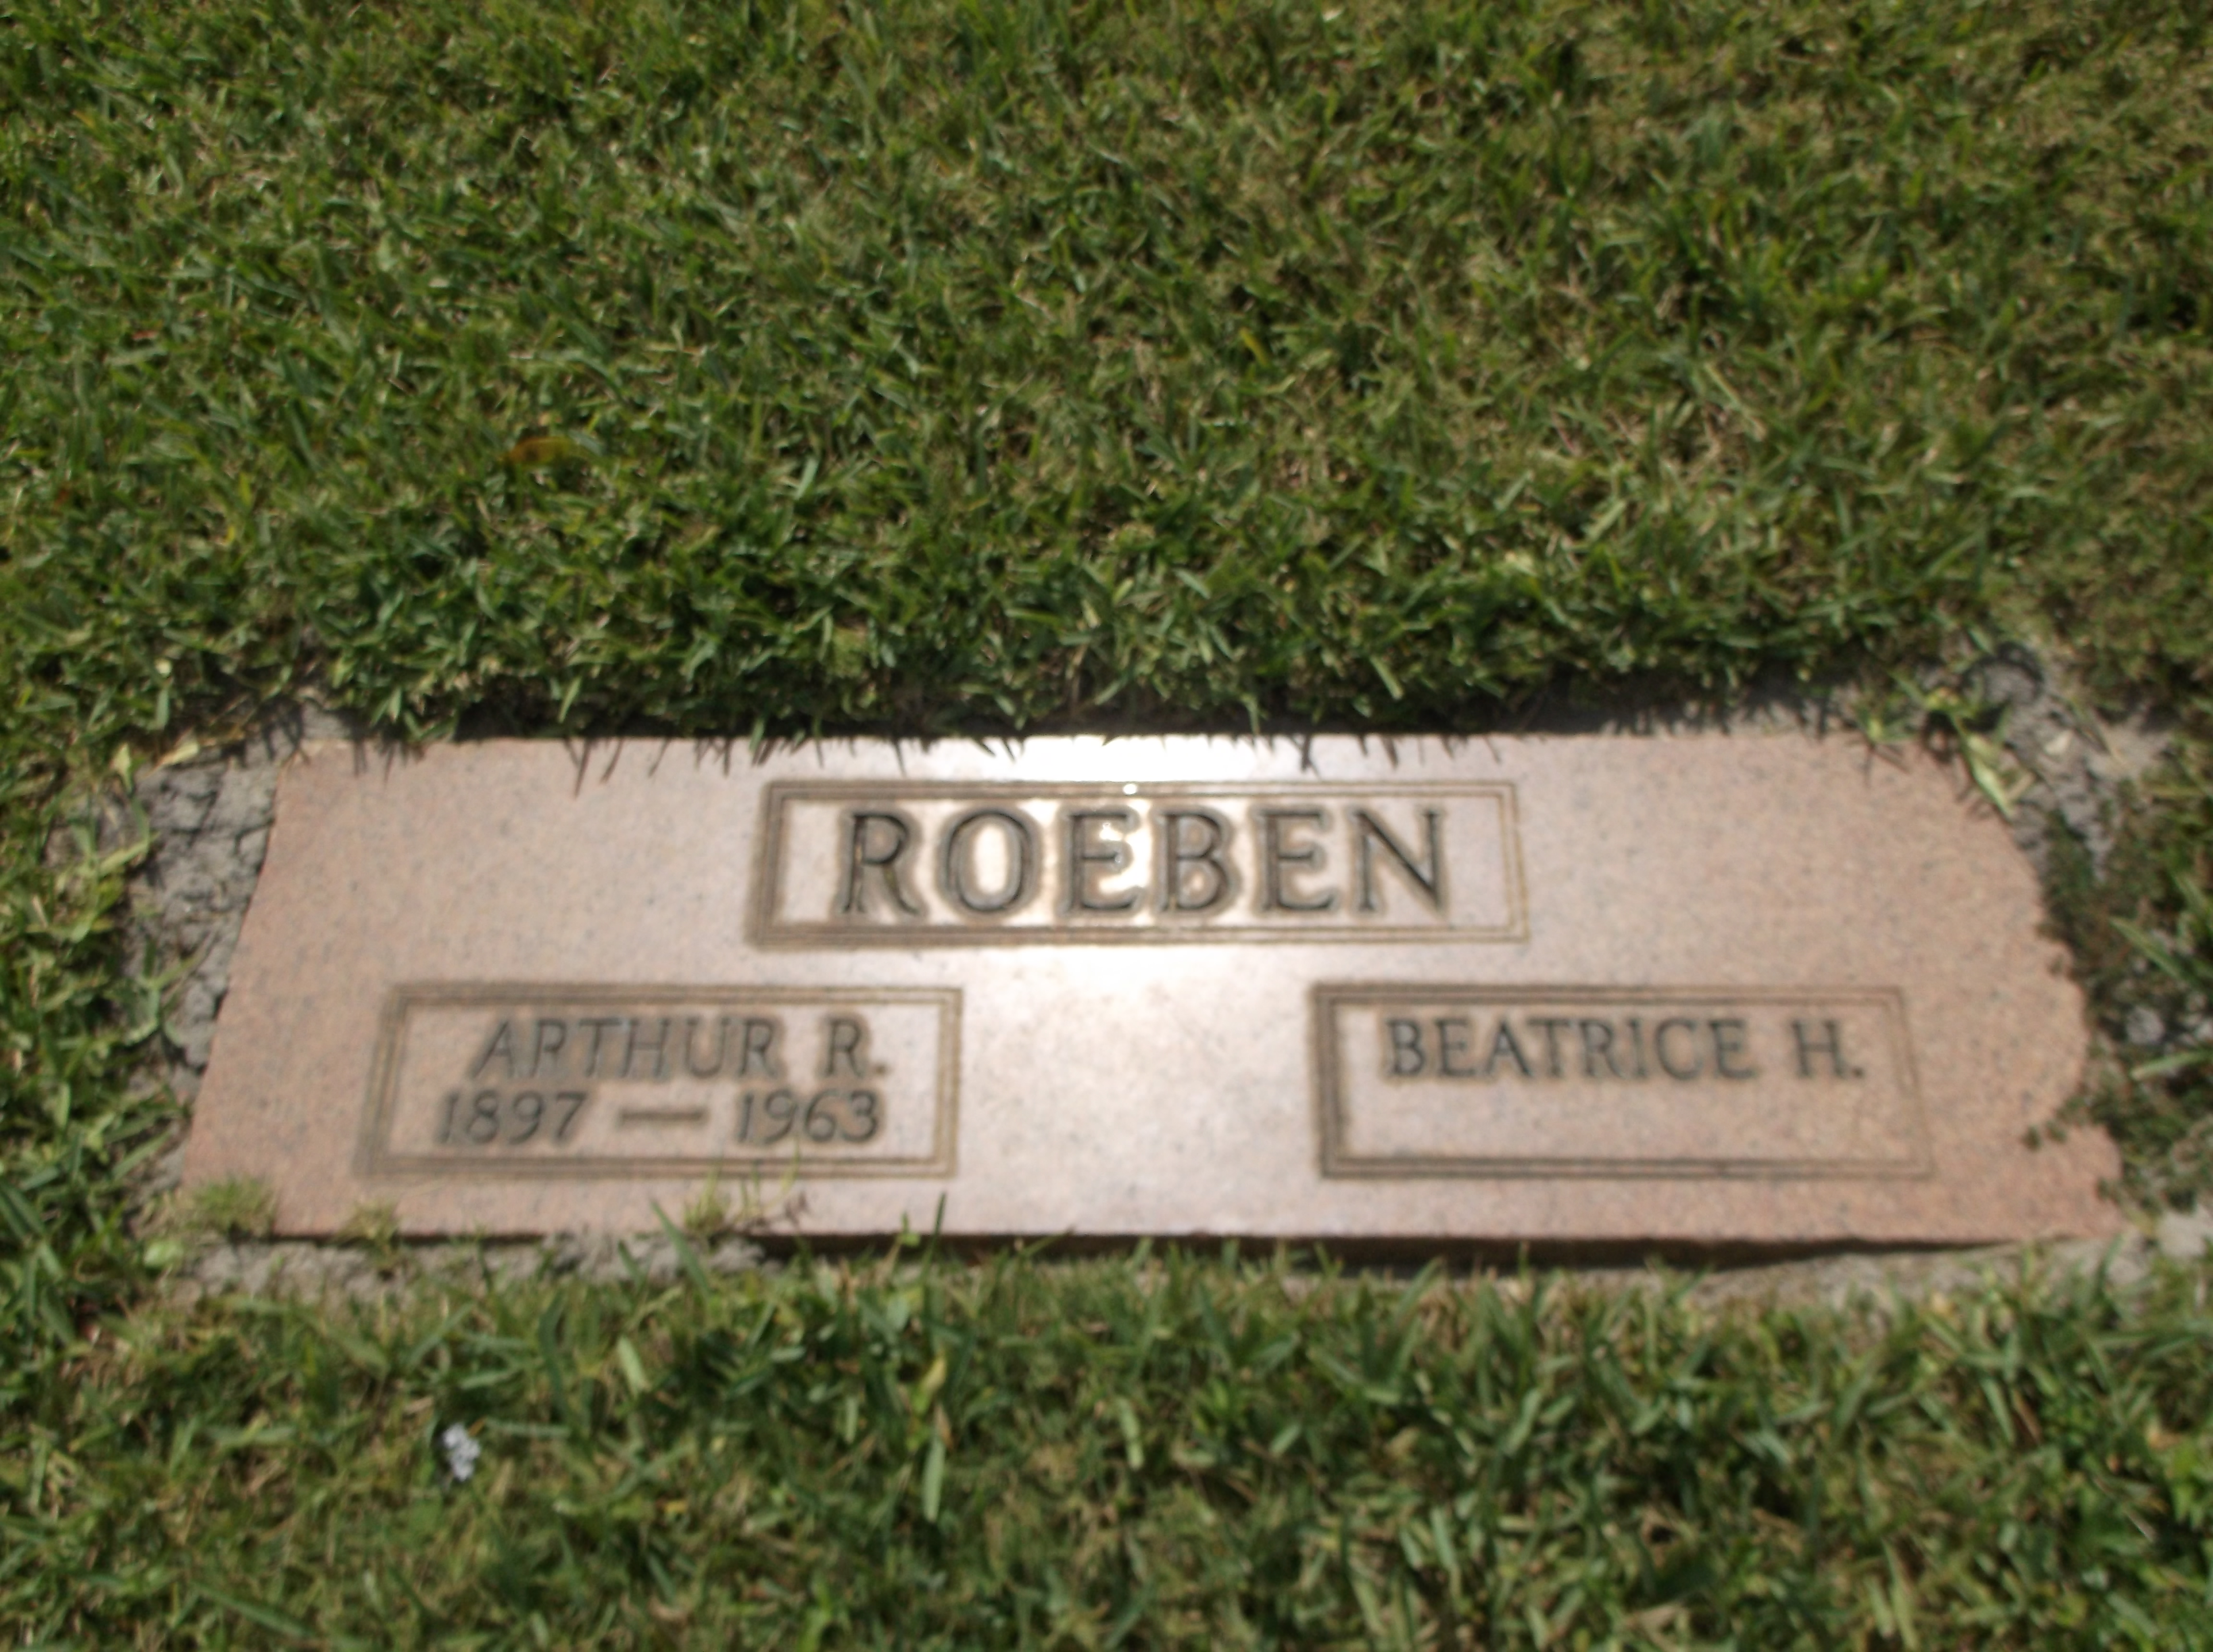 Arthur R Roeben